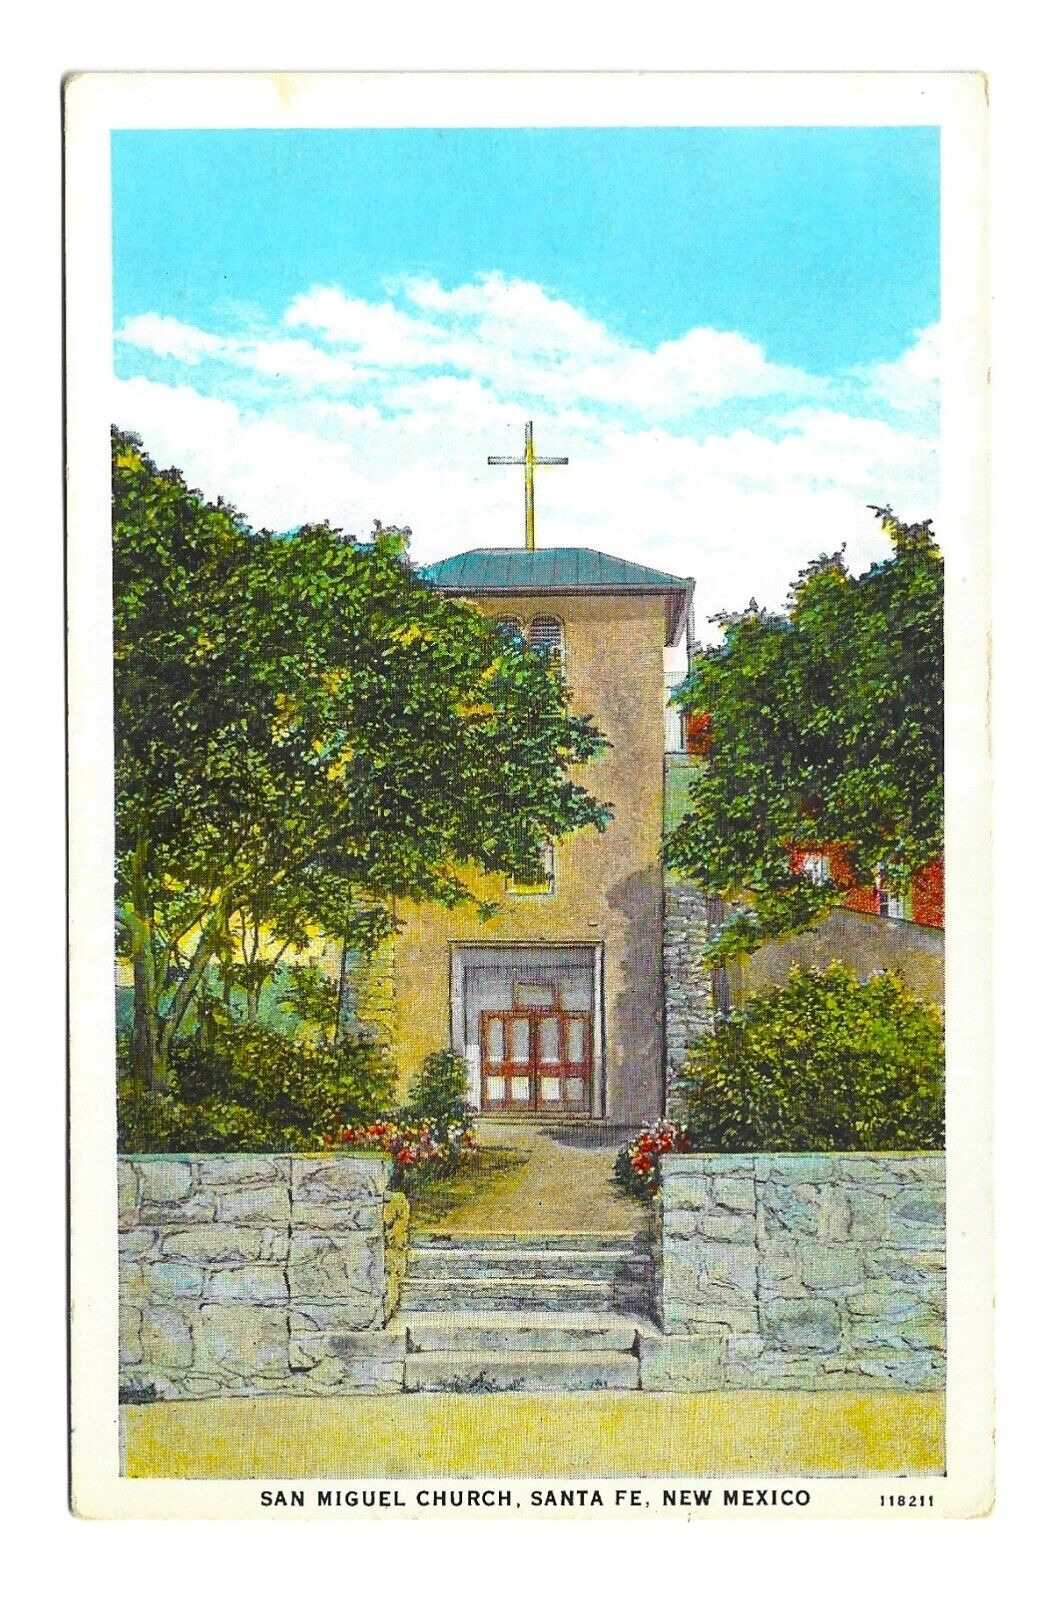 SAN MIGUEL CHURCH, SANTA FE, NEW MEXICO – Oldest Church in U.S. - 1927 Postcard